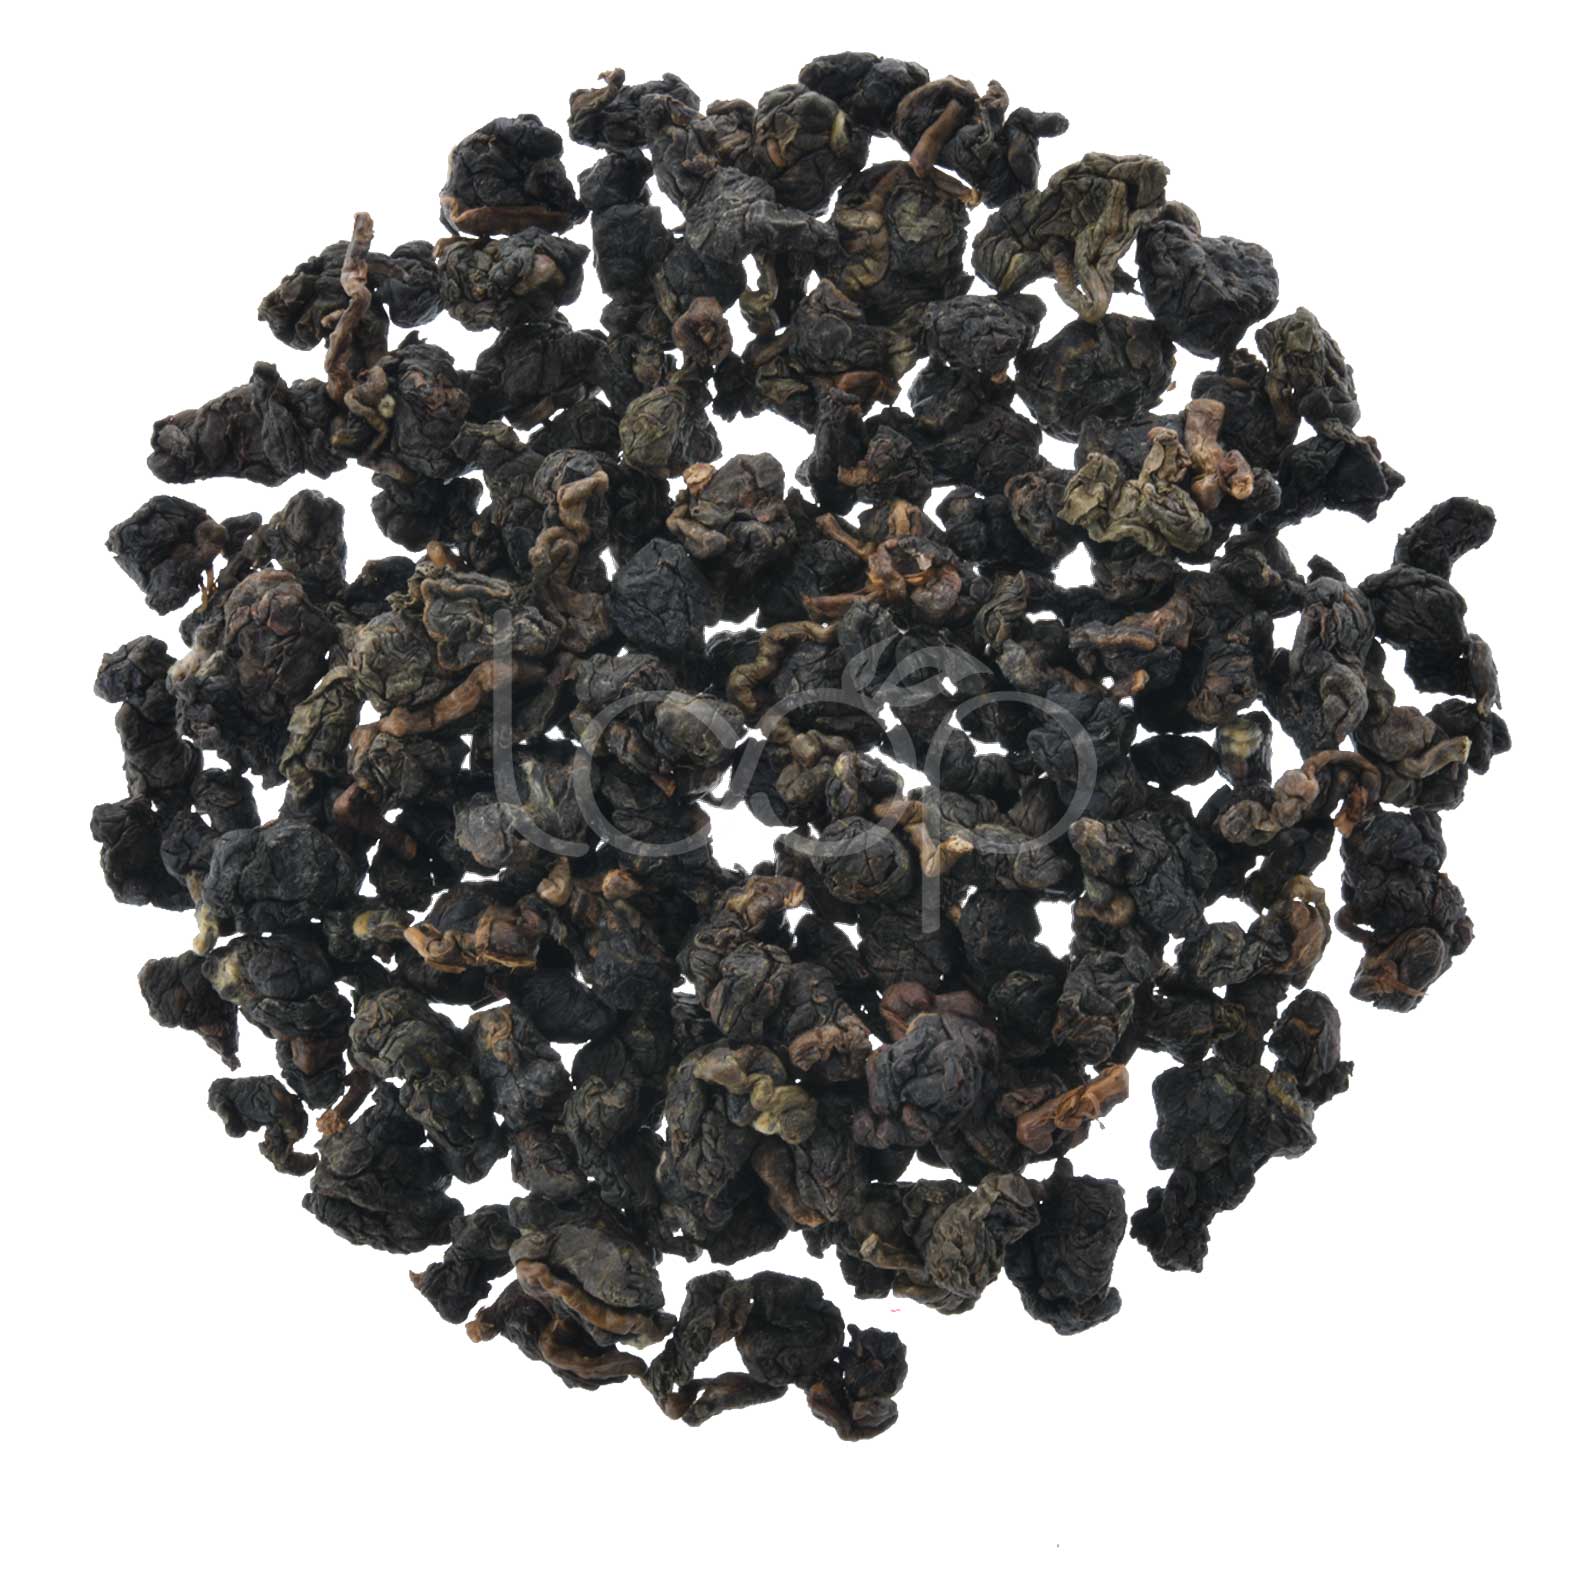 Factory Promotional Tieguanyin Tea – China Oolong Tea Red Oolong Tea#2 – Goodtea